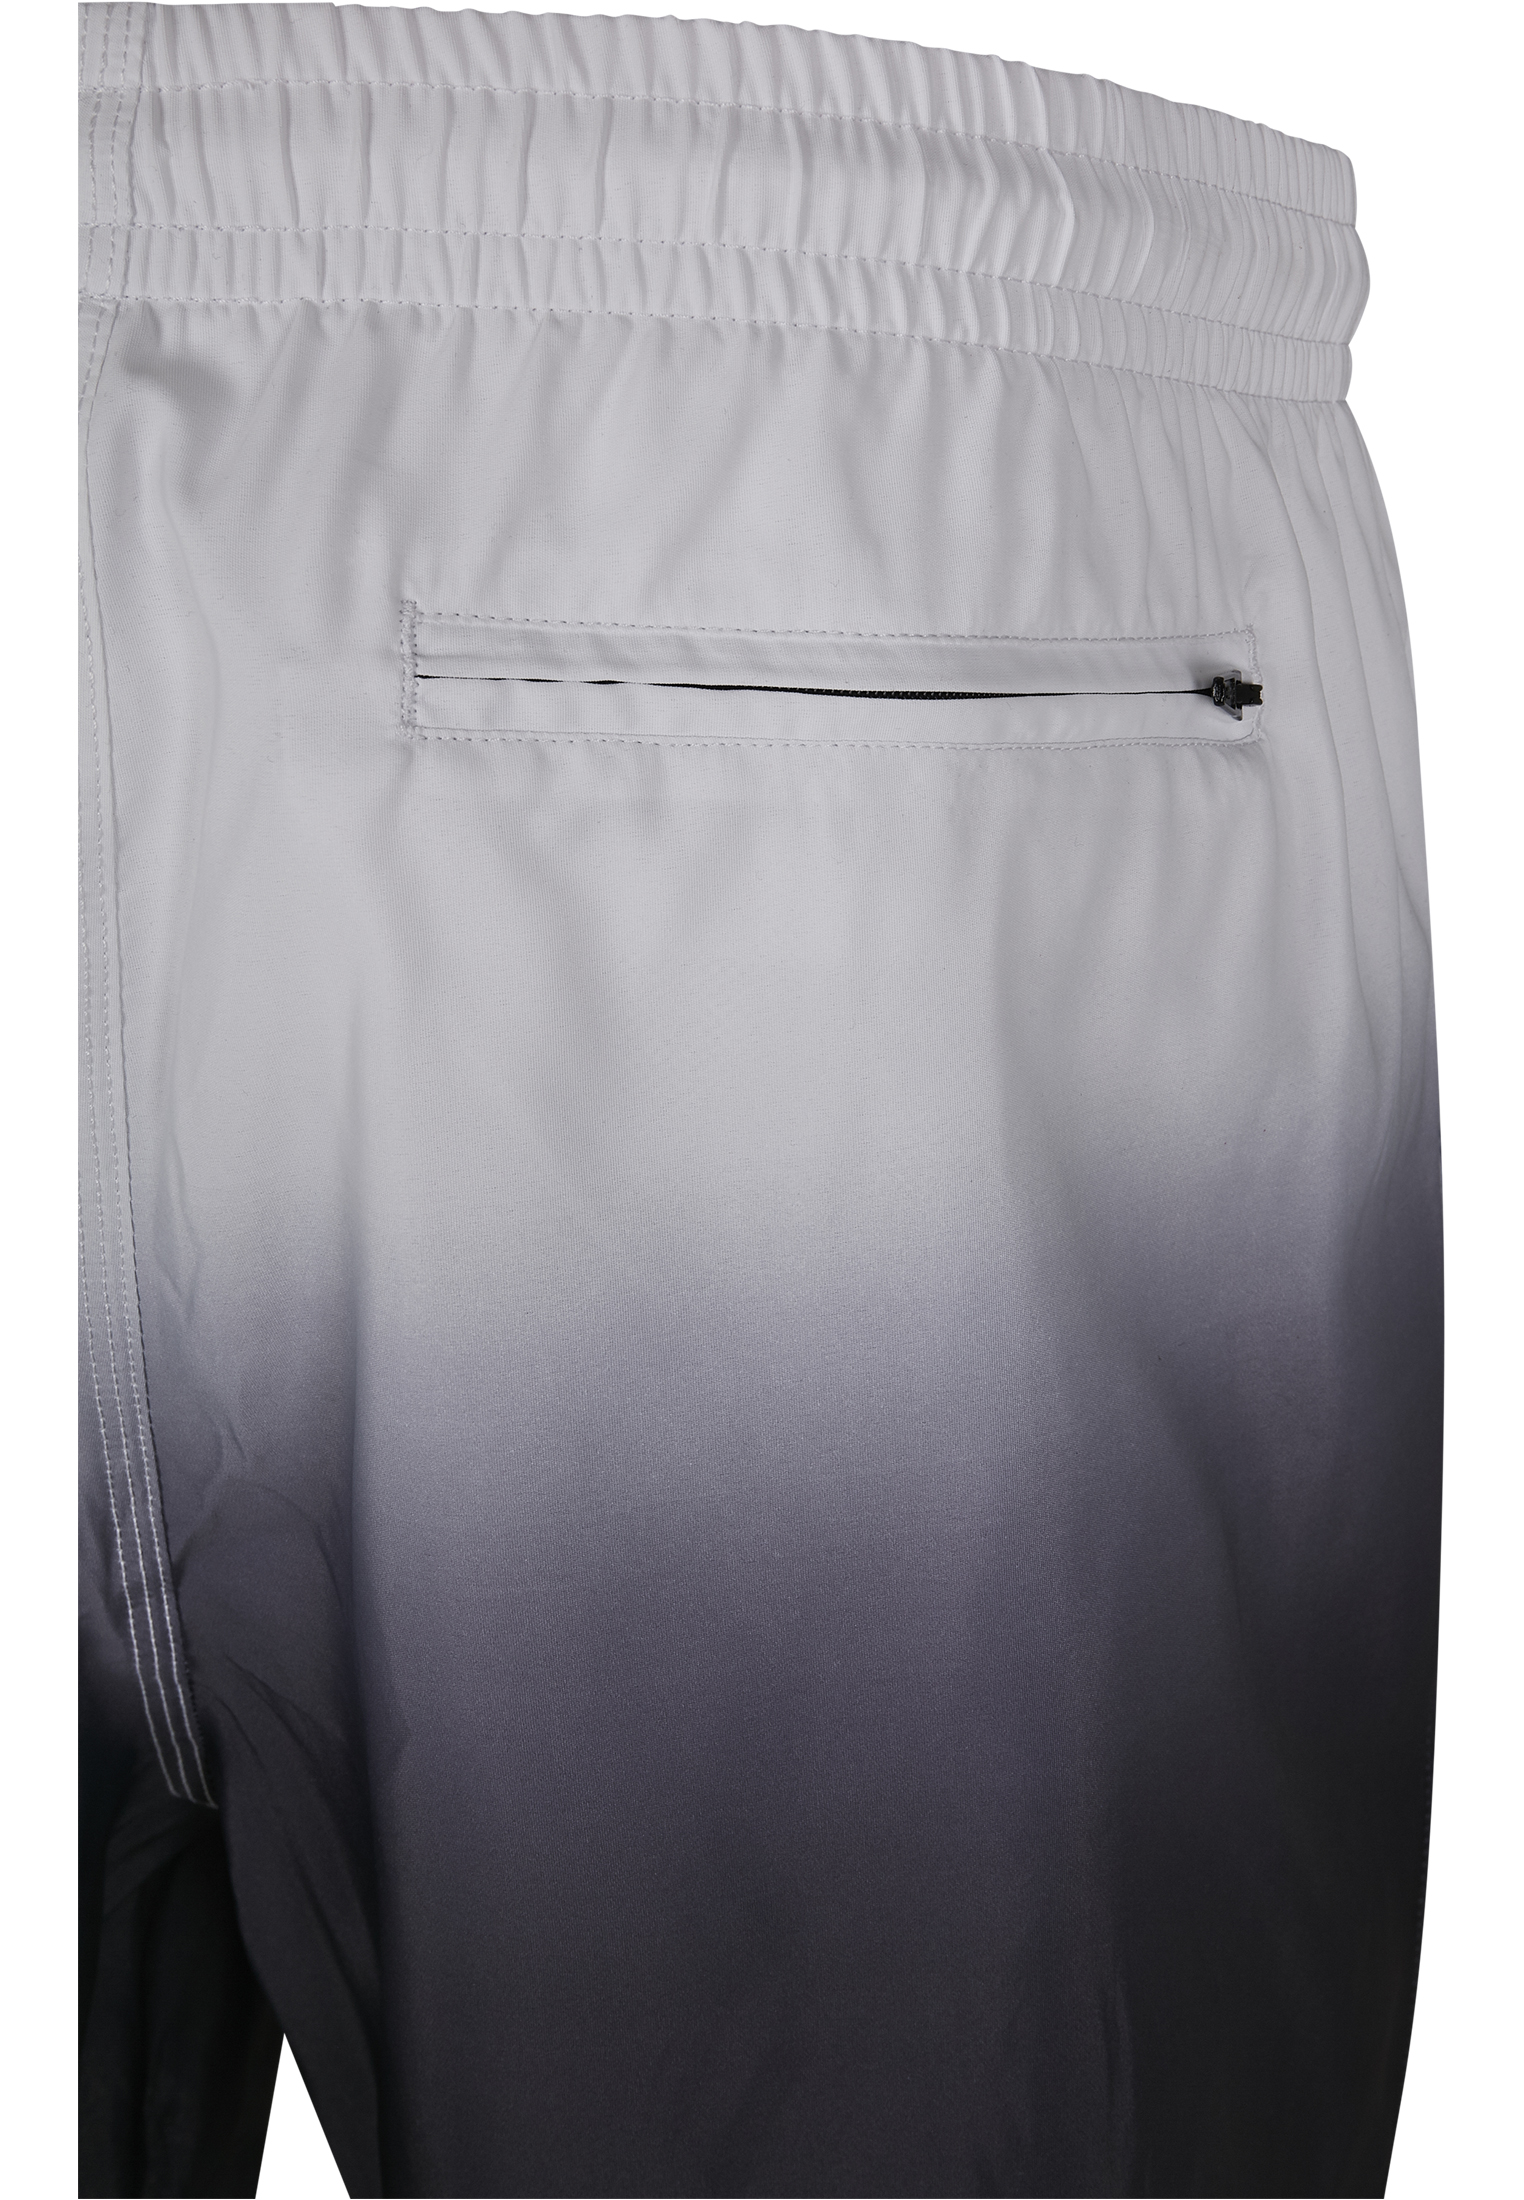 Bademode Dip Dye Swim Shorts in Farbe wht/blk